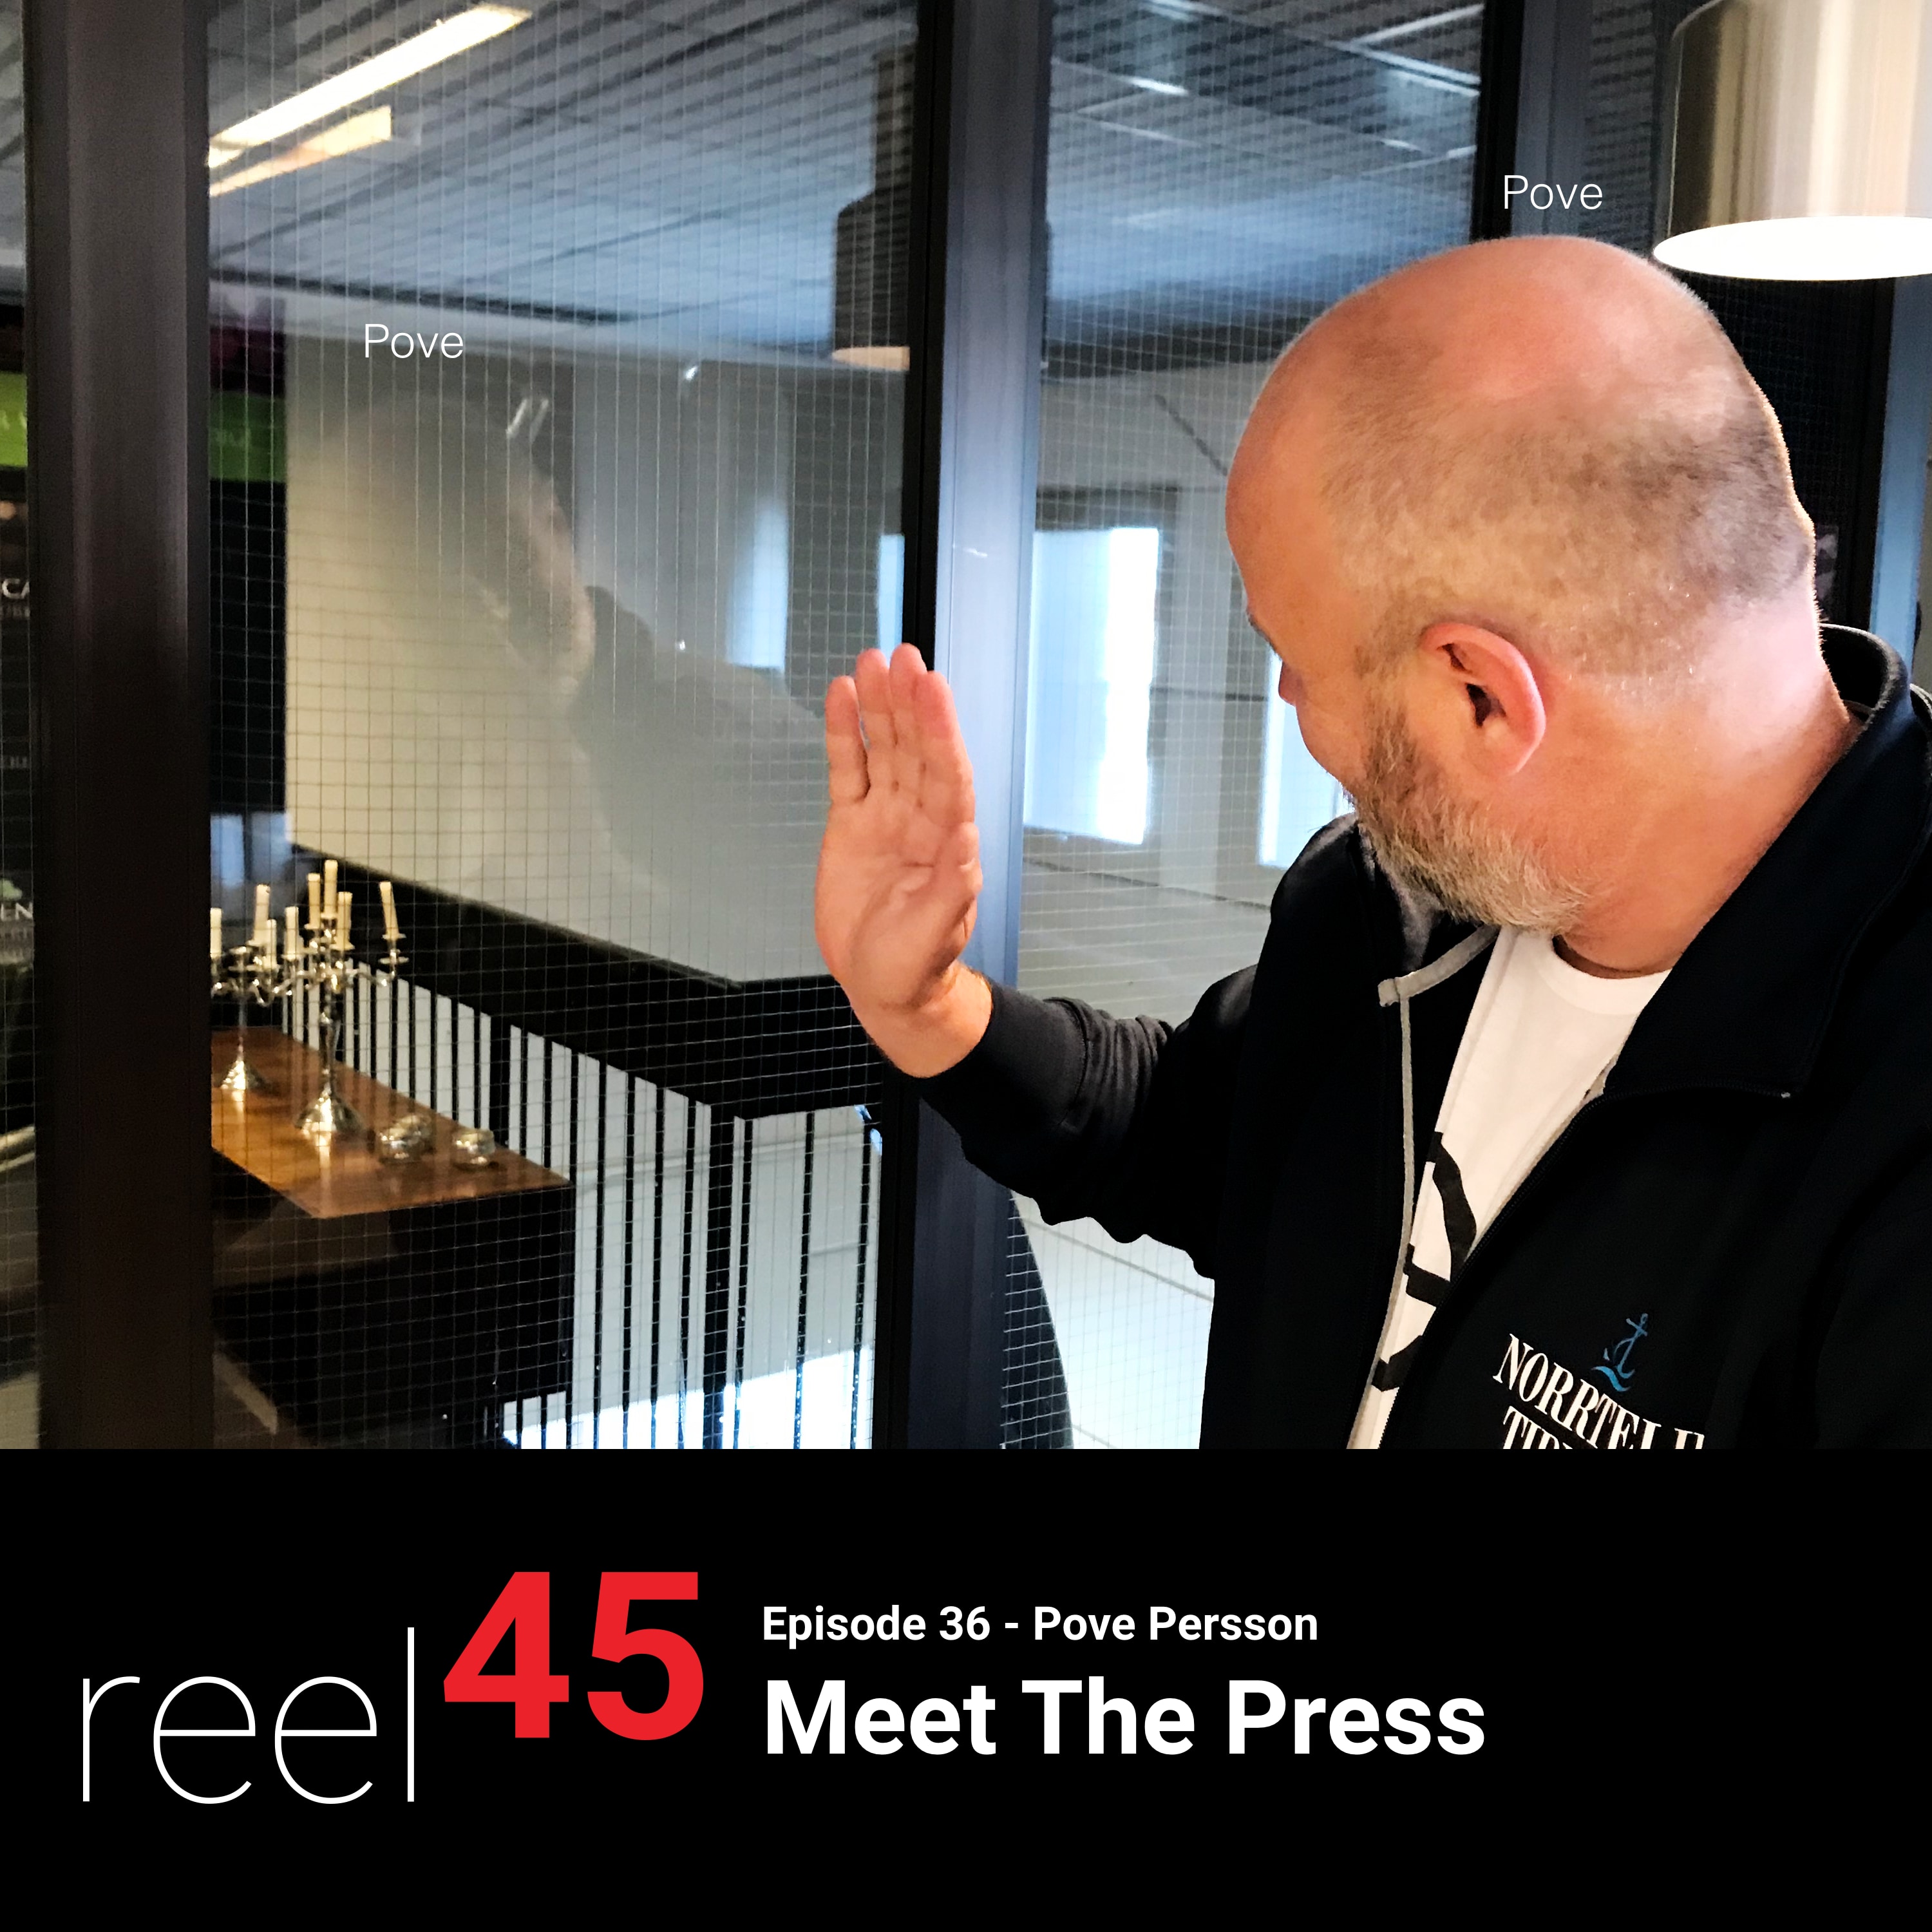 Episode 36- Meet The Press! Pove Persson/Norrtälje Tidning-Newspaper